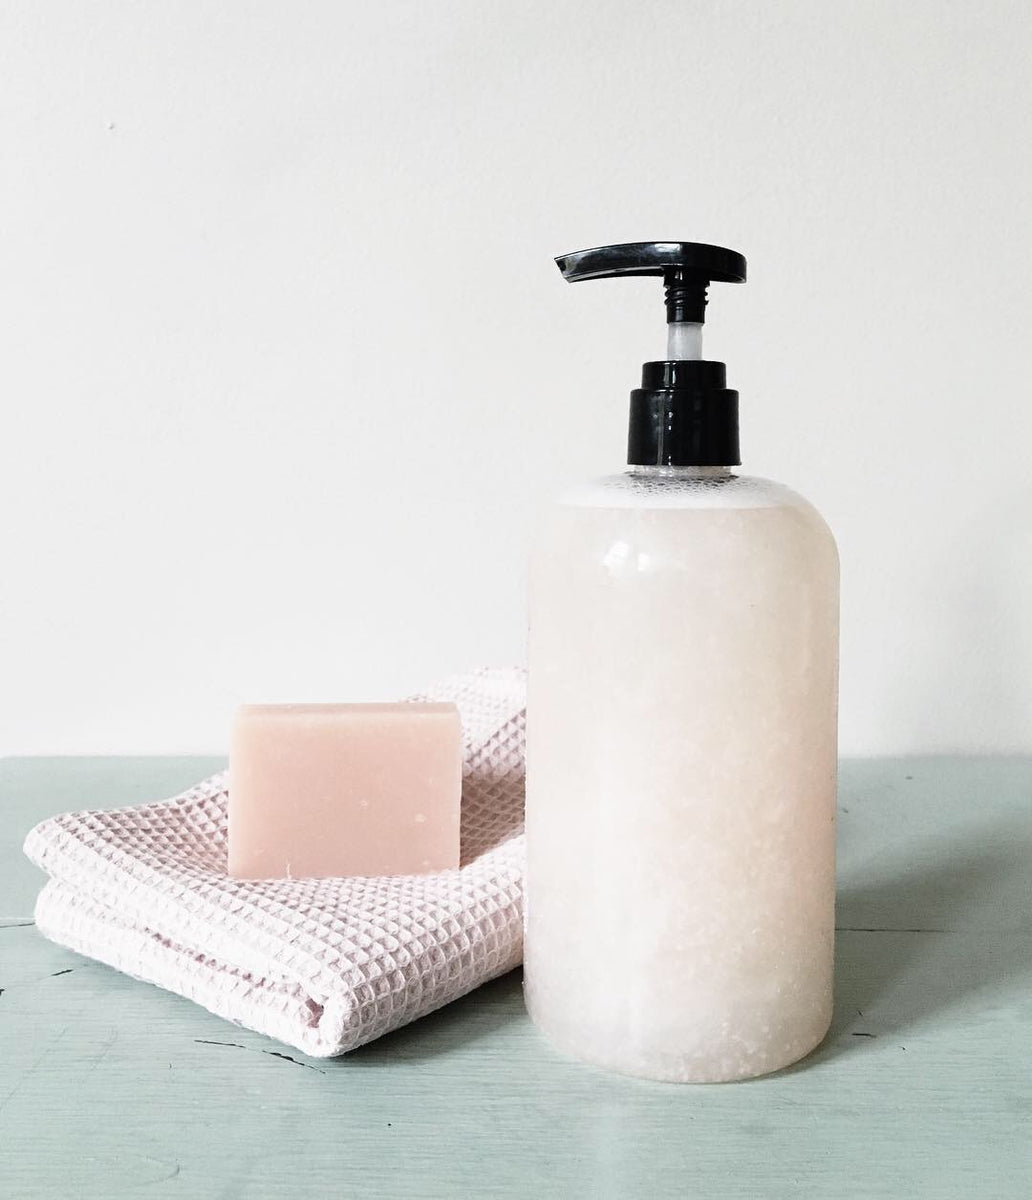 DIY Liquid Hand Soap Recipe The Kind Store